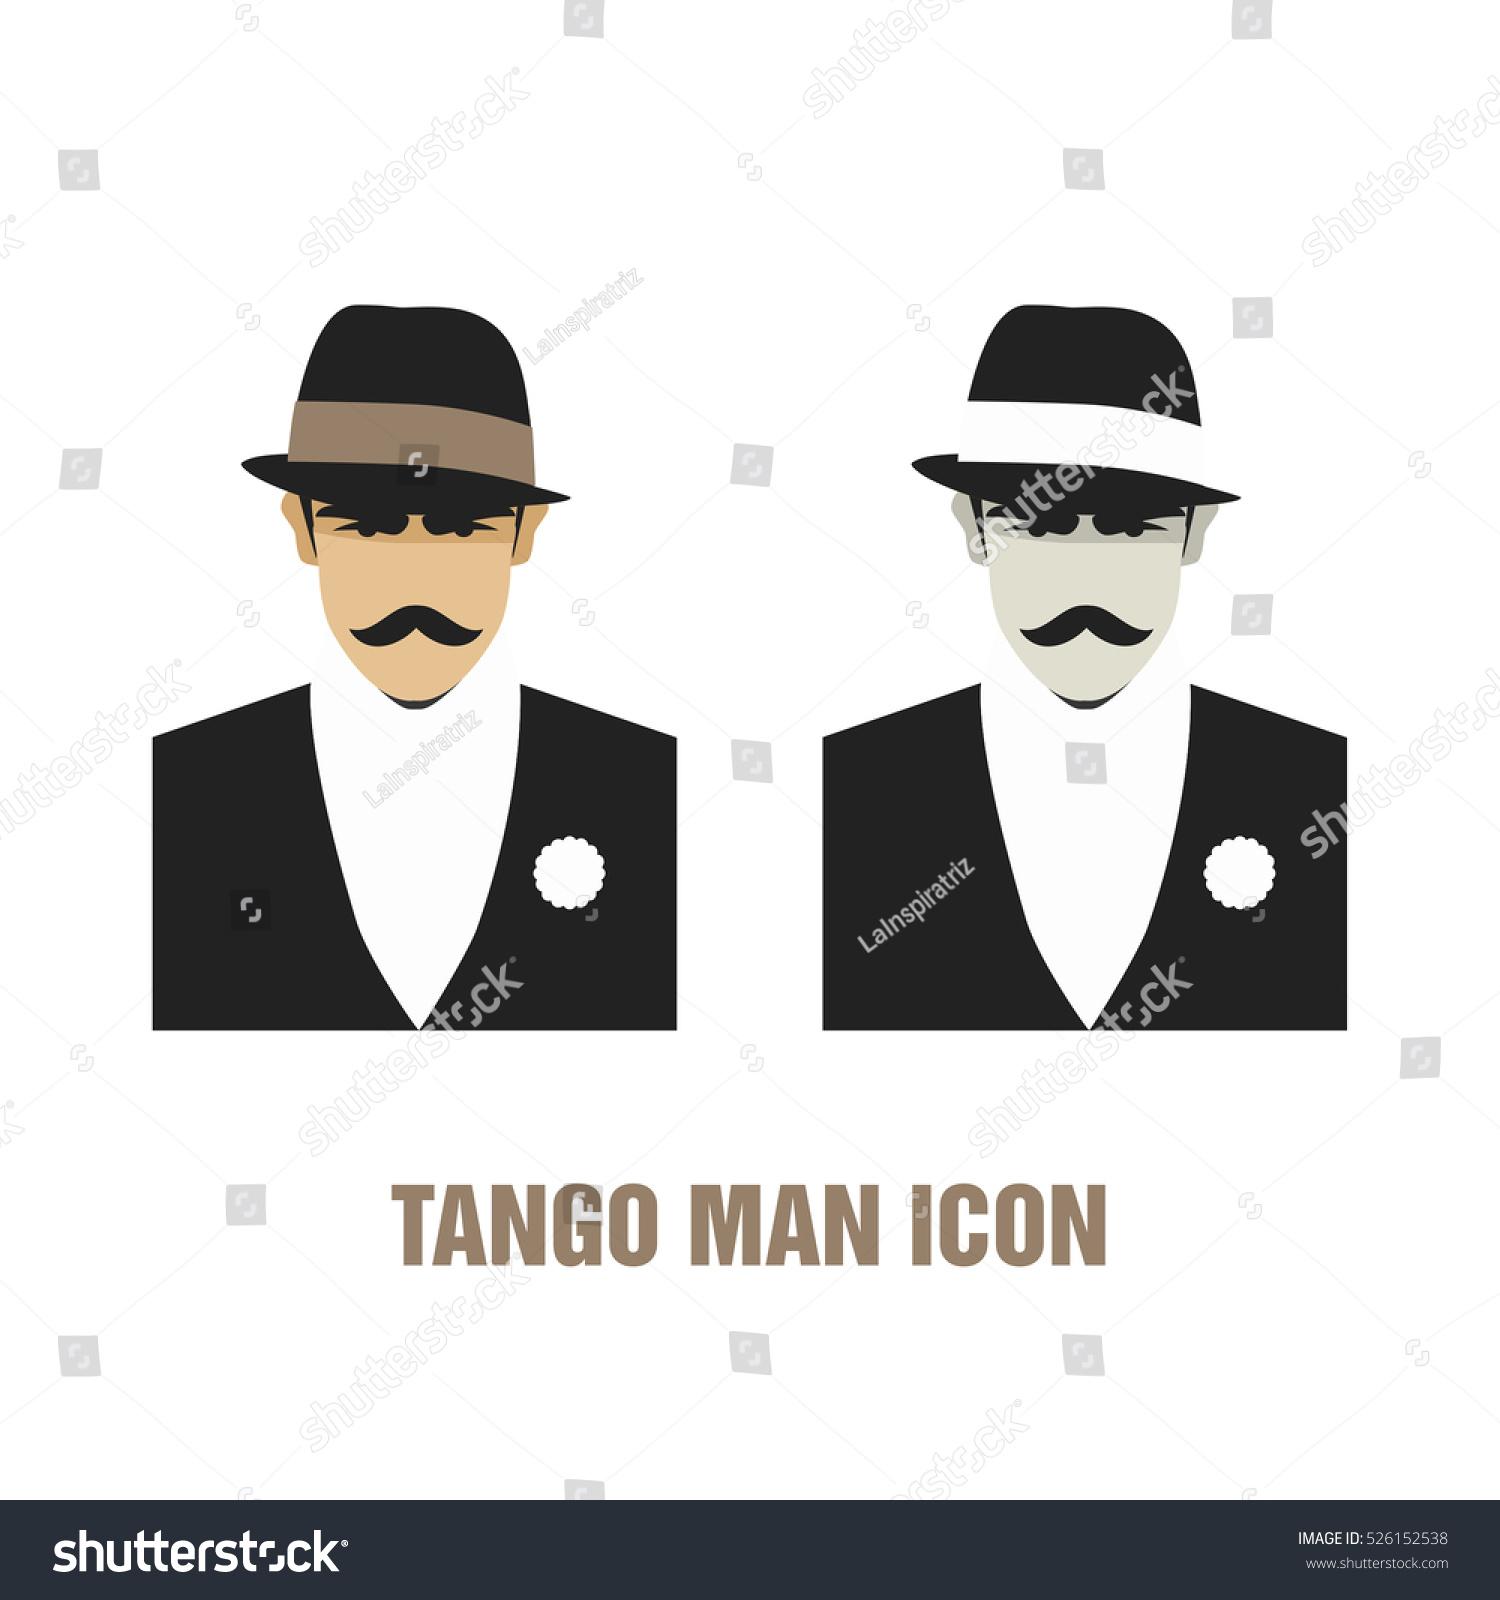 SVG of Tango man icon. Vector illustration. Good for logo. svg